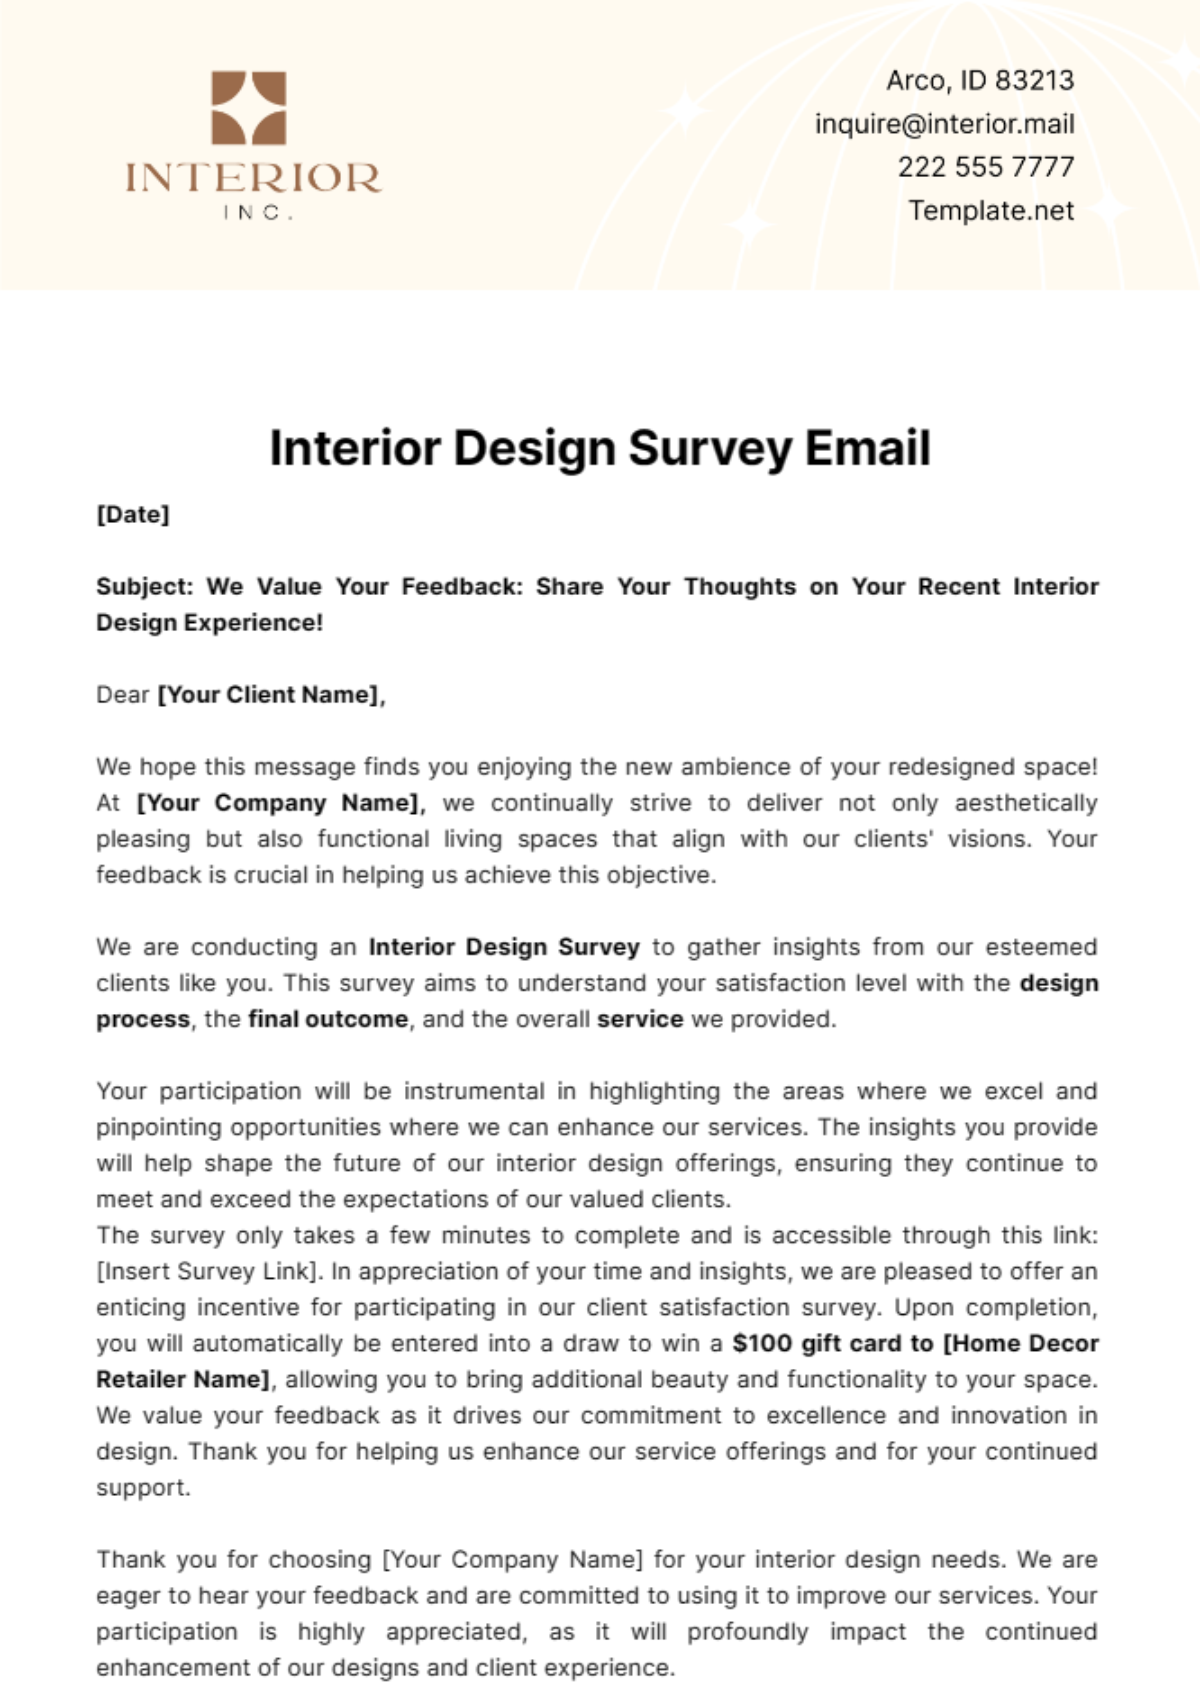 Free Interior Design Survey Email Template